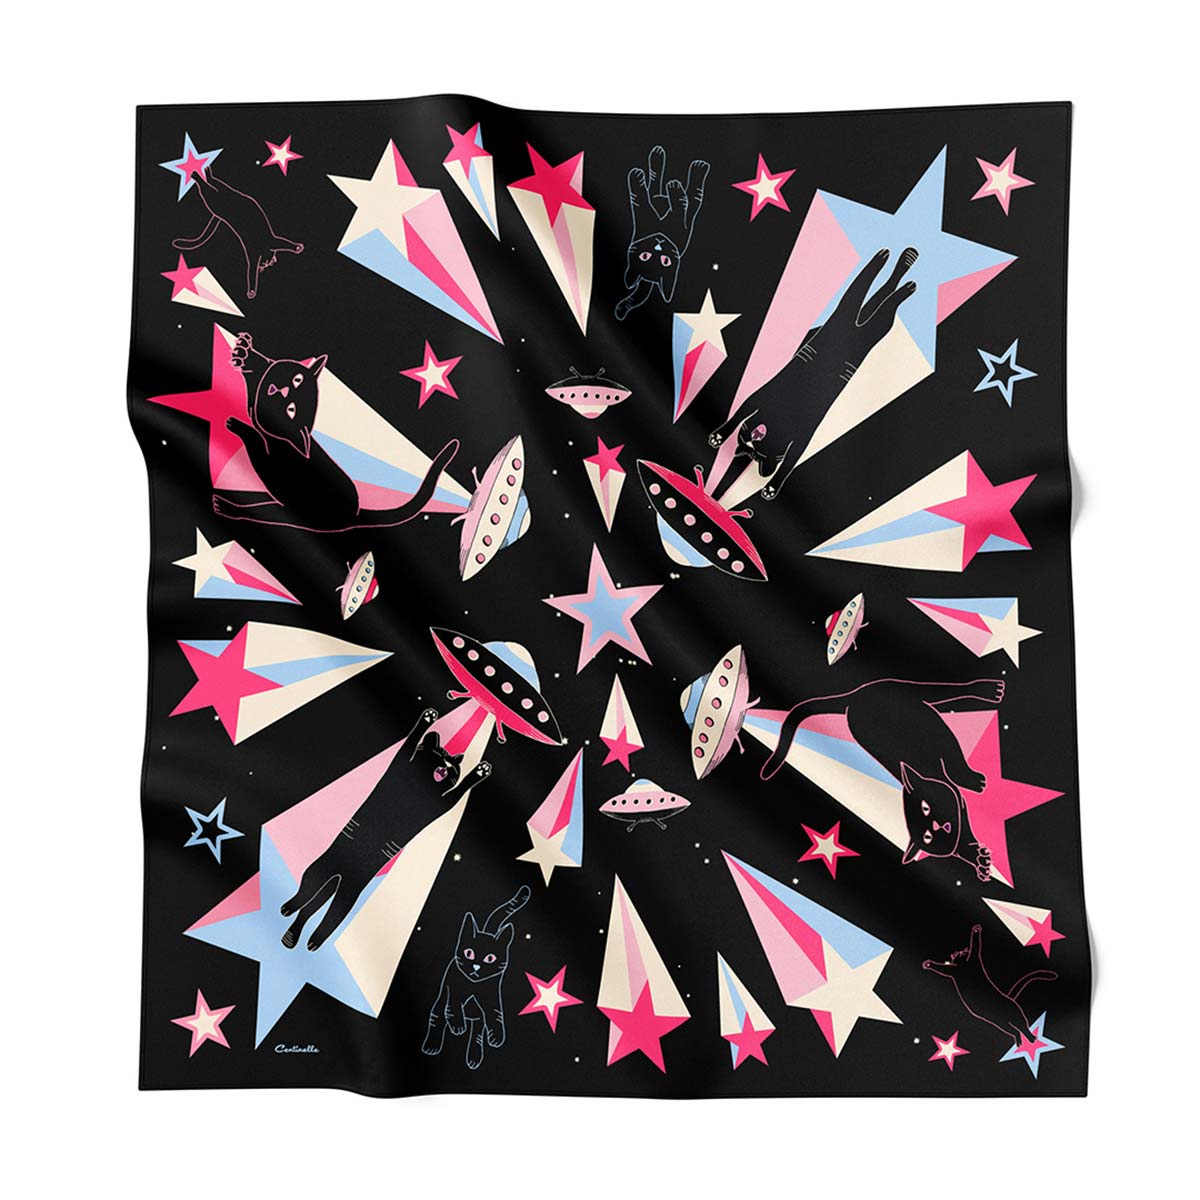 Neon stars and black cats on black silk bandana.